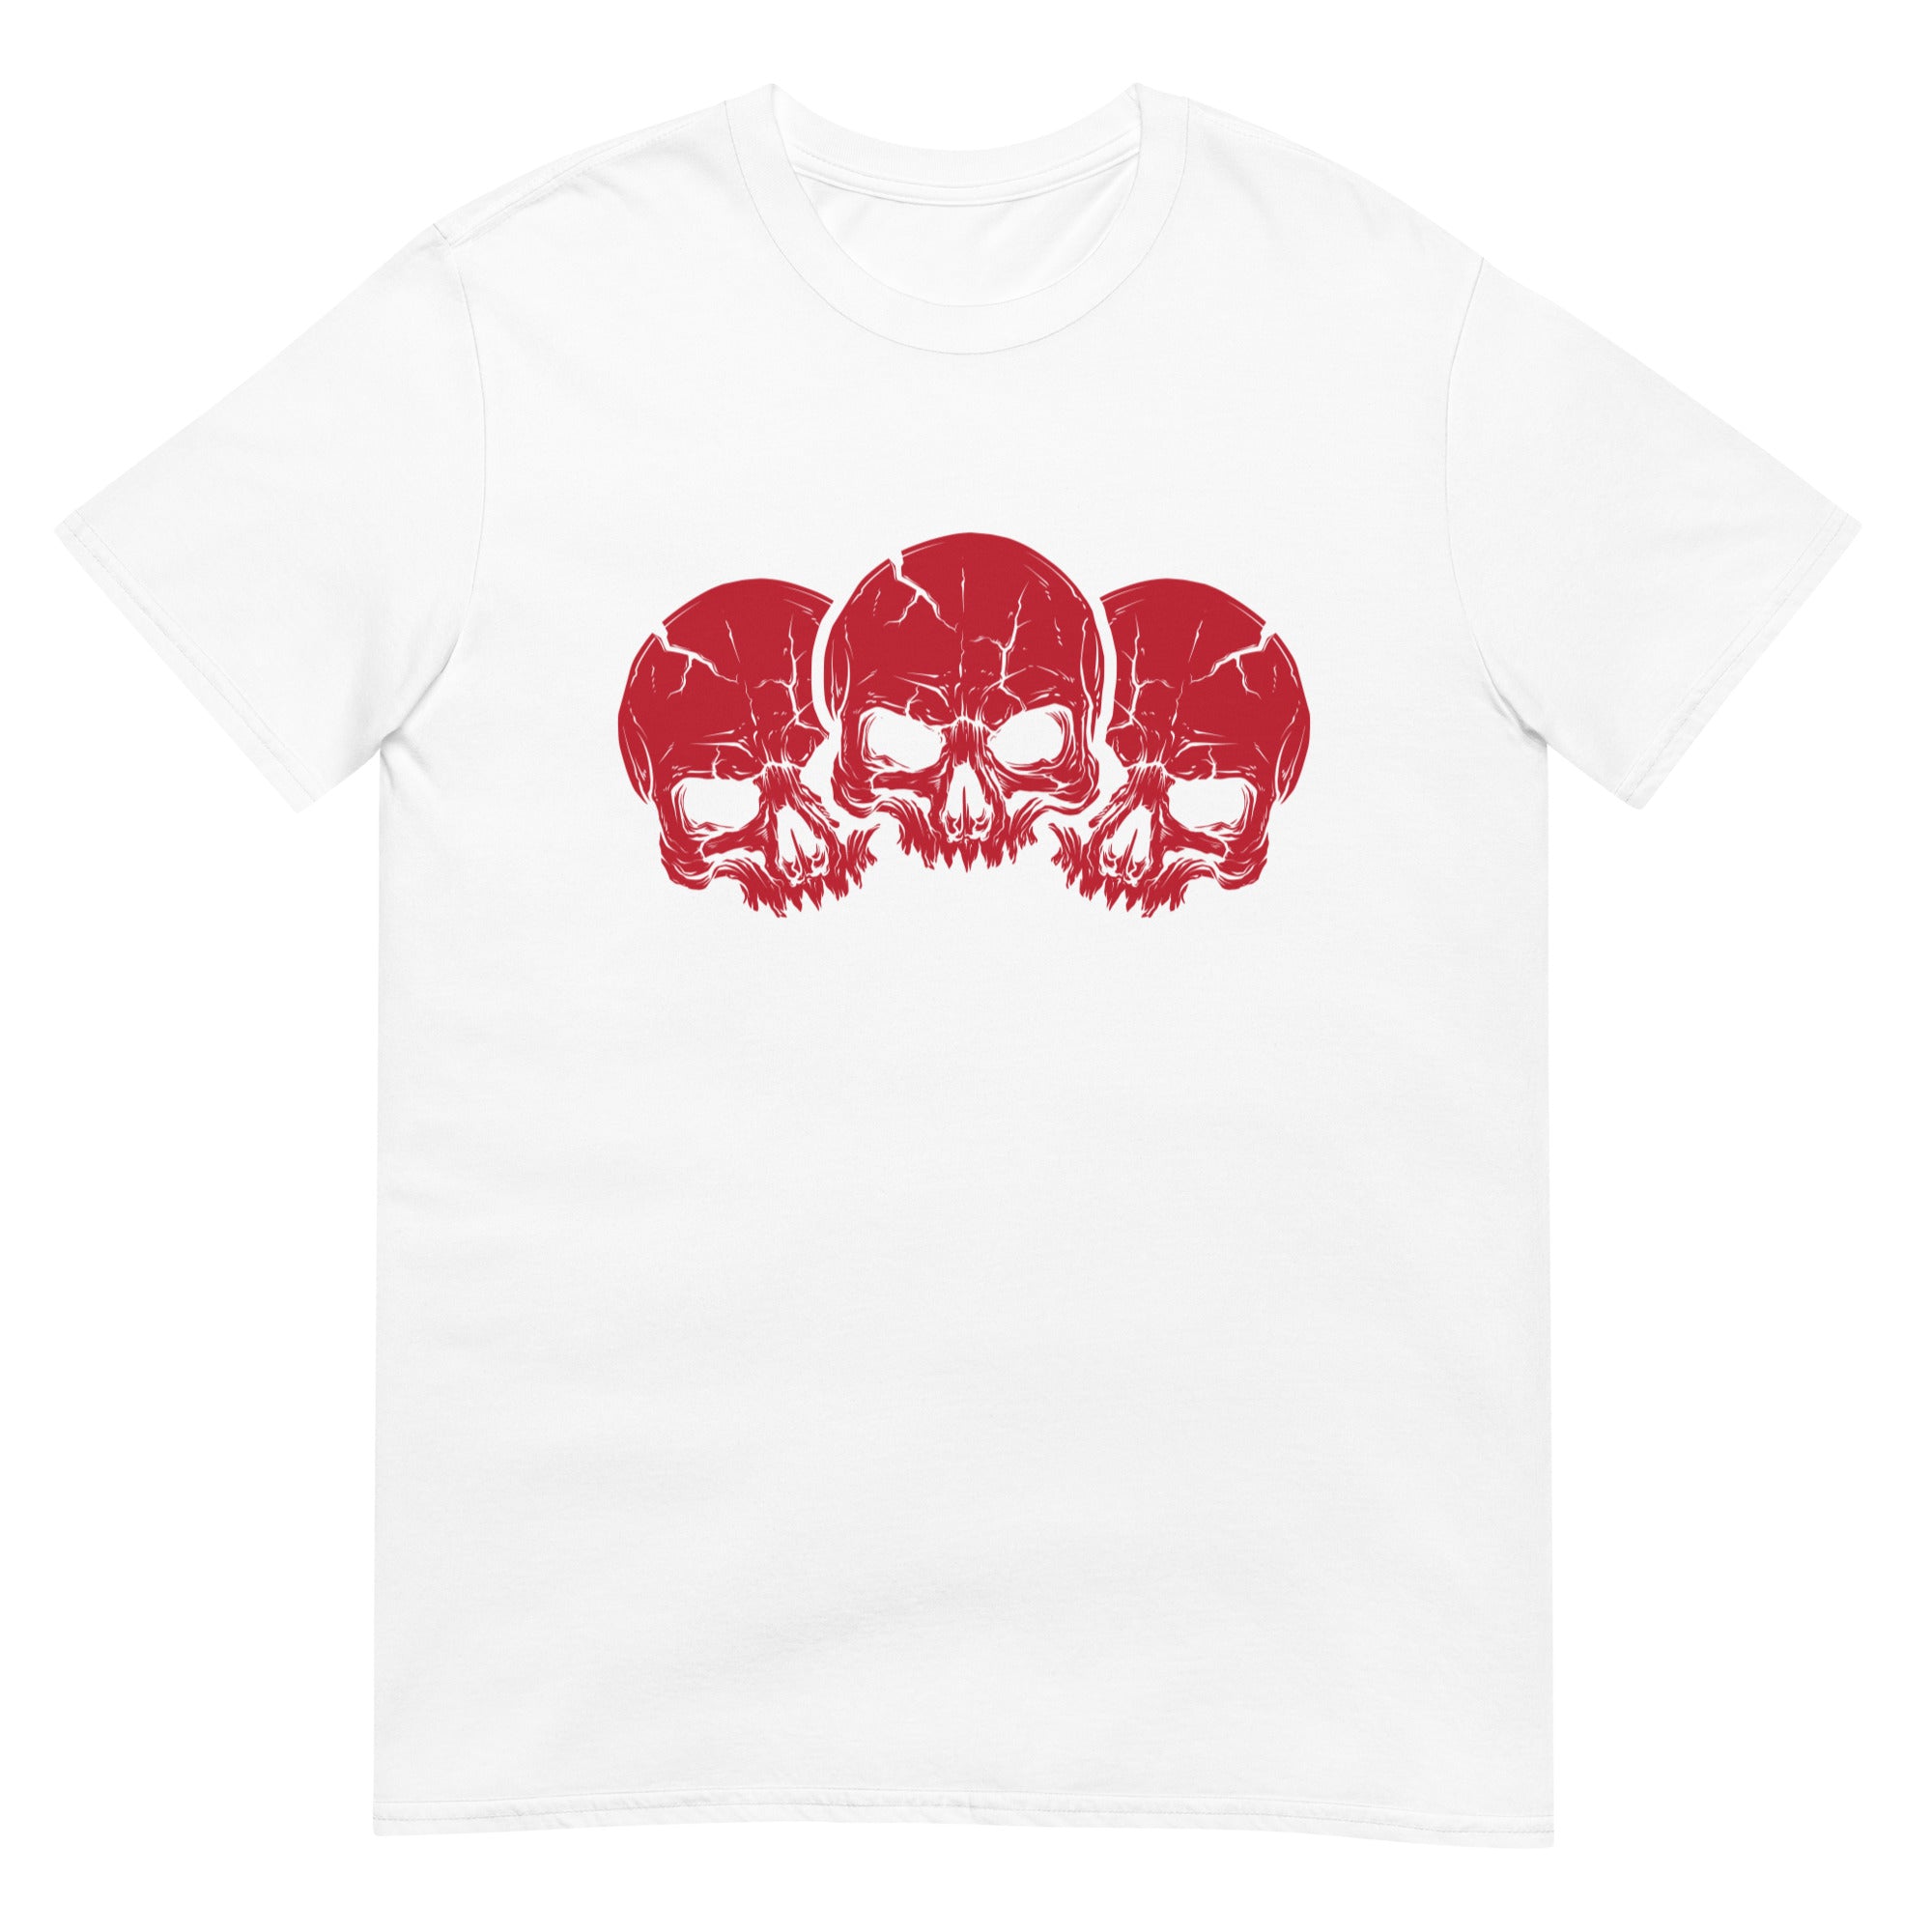 Halloween Skull Short-Sleeve Unisex T-Shirt